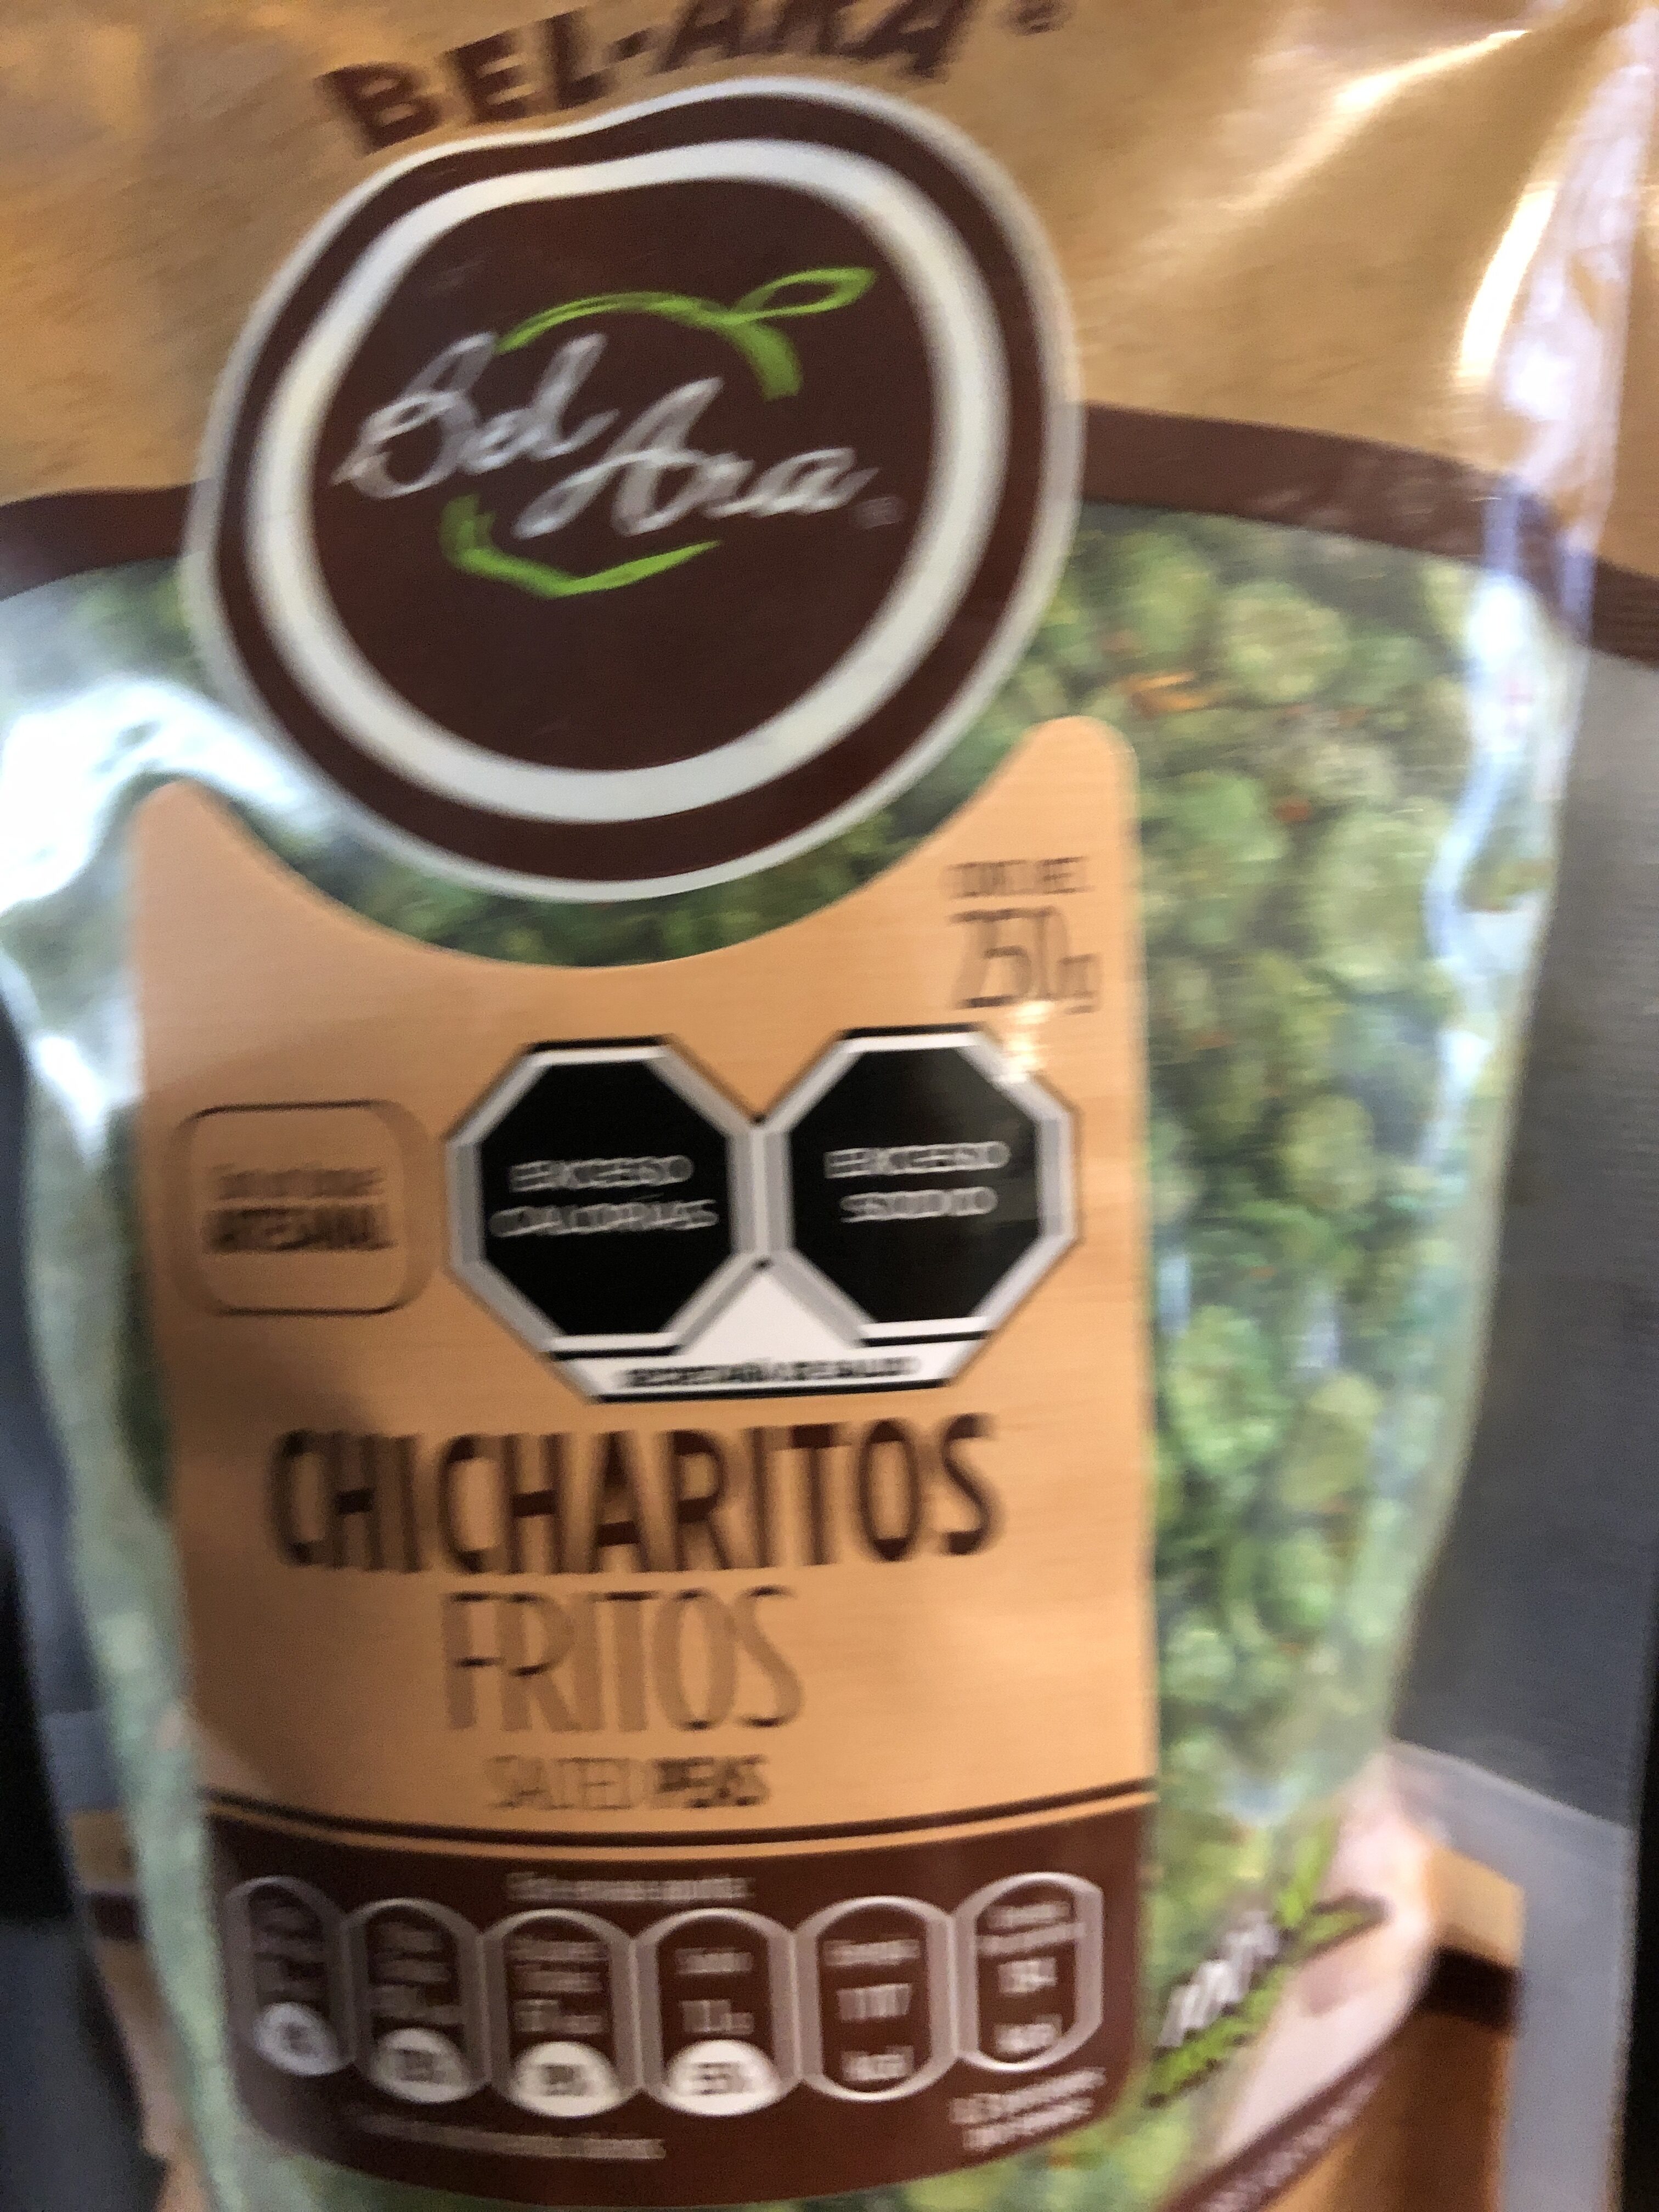 Chicharitos fritos - Produkt - es